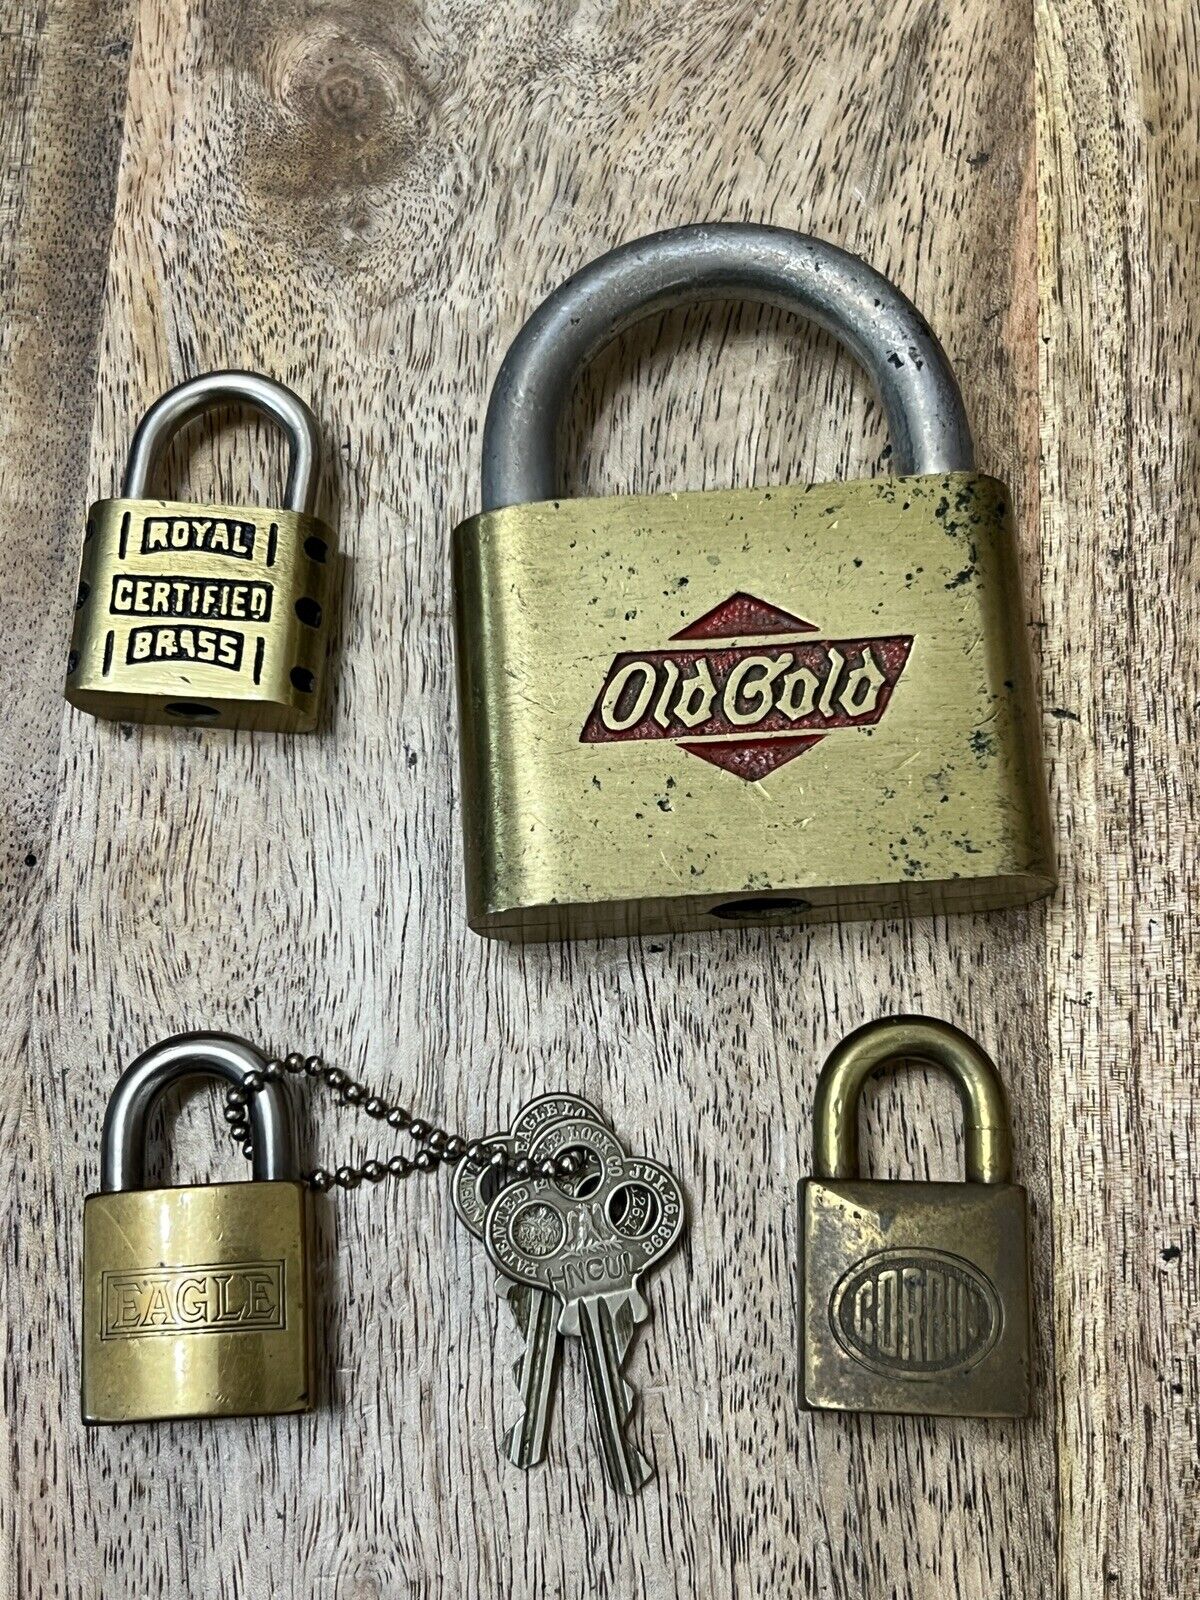 Vintage Antique Old Corbin Old Gold Eagle Etc. Padlock Lot One Lock With Key